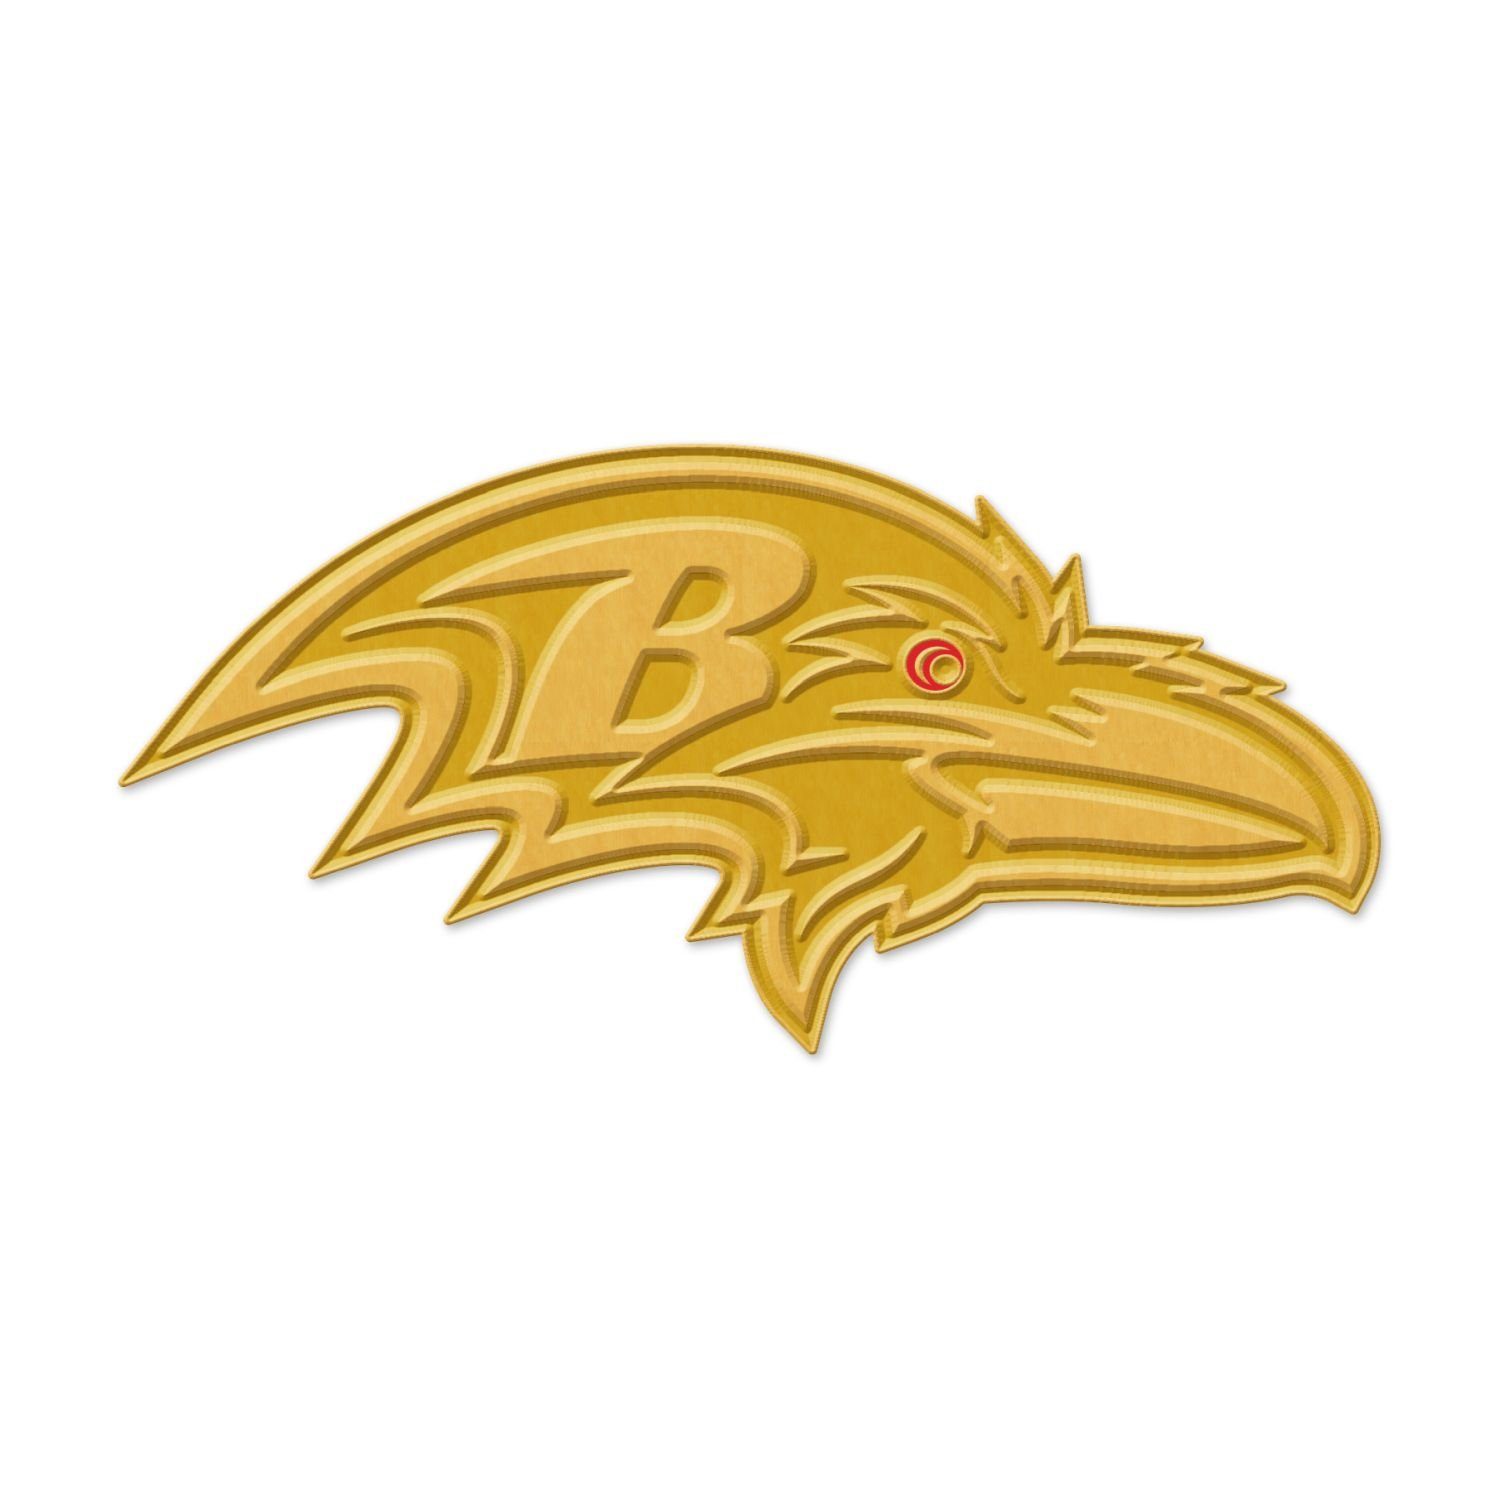 WinCraft Schmuck Pins Universal Baltimore Teams NFL Ravens GOLD Caps PIN